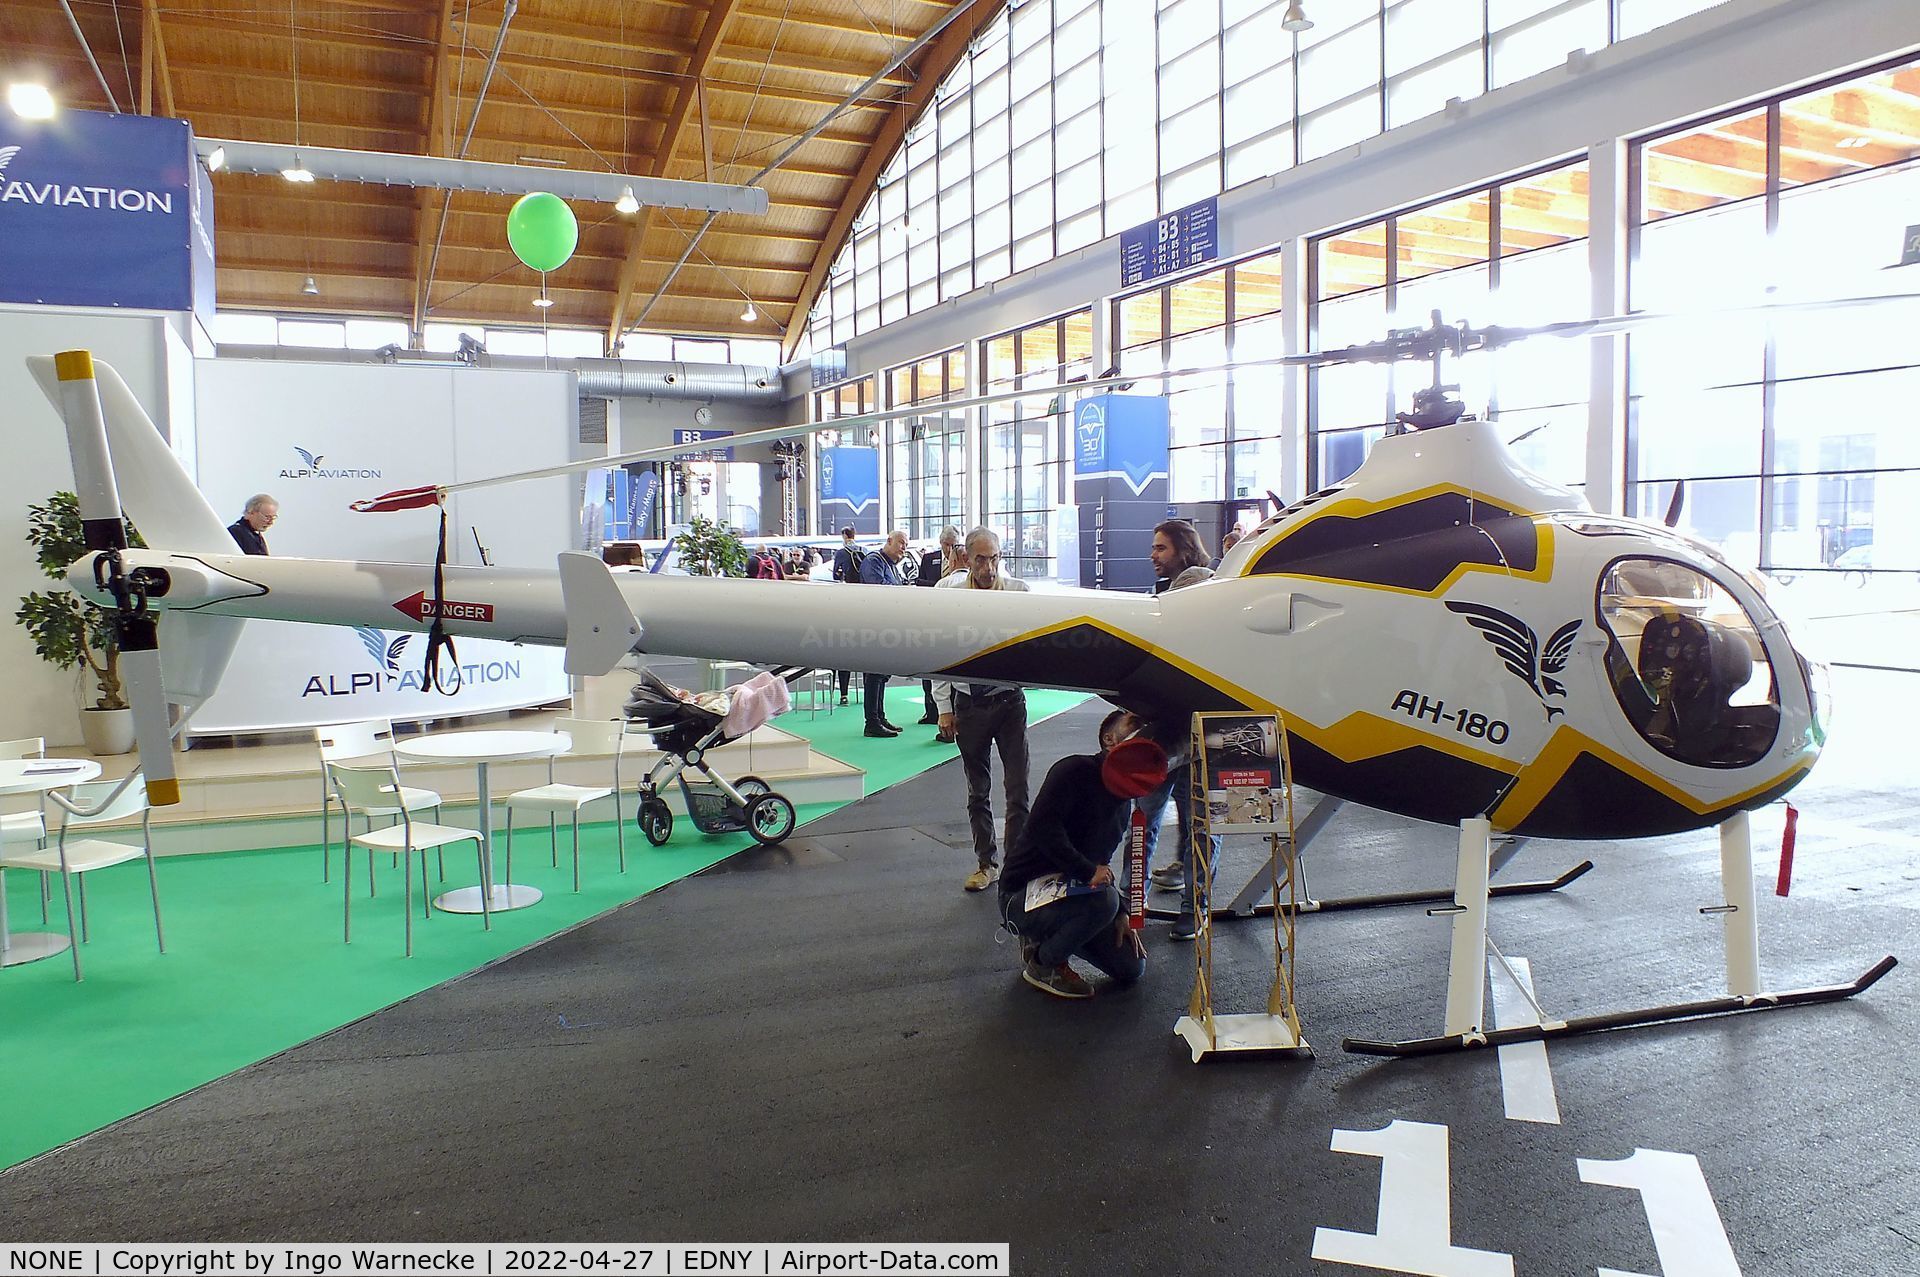 NONE, 2022 Alpi Aviation Syton AH180 C/N None, Alpi Aviation Syton AH180 prototype at the AERO 2022, Friedrichshafen